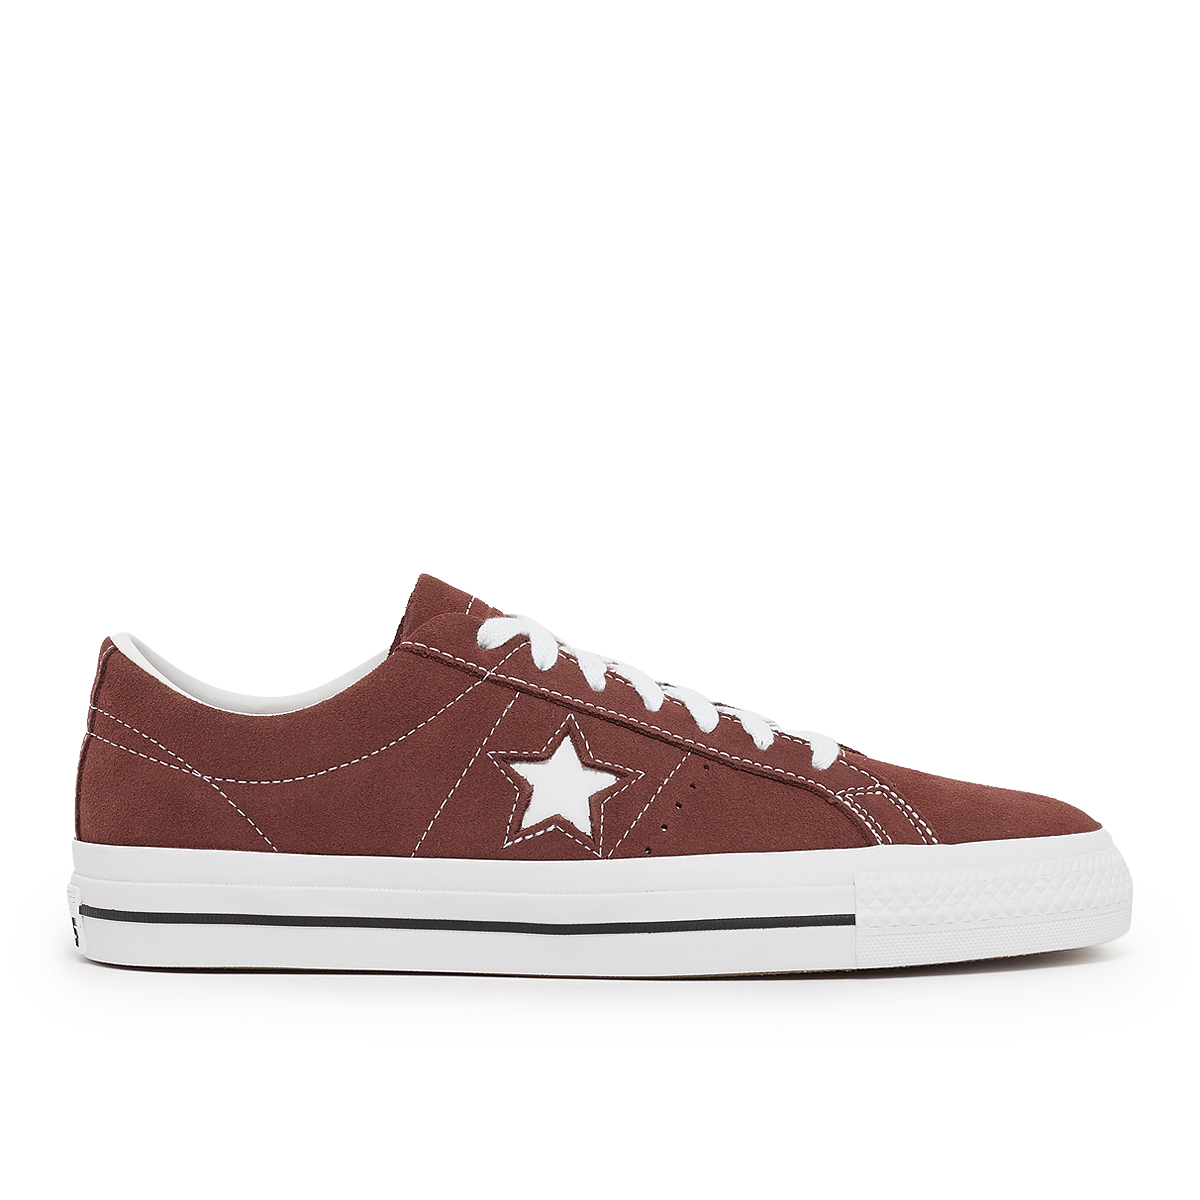 Converse Men's One Star Pro Sneakers in Red Oak/White/Black - A02945C